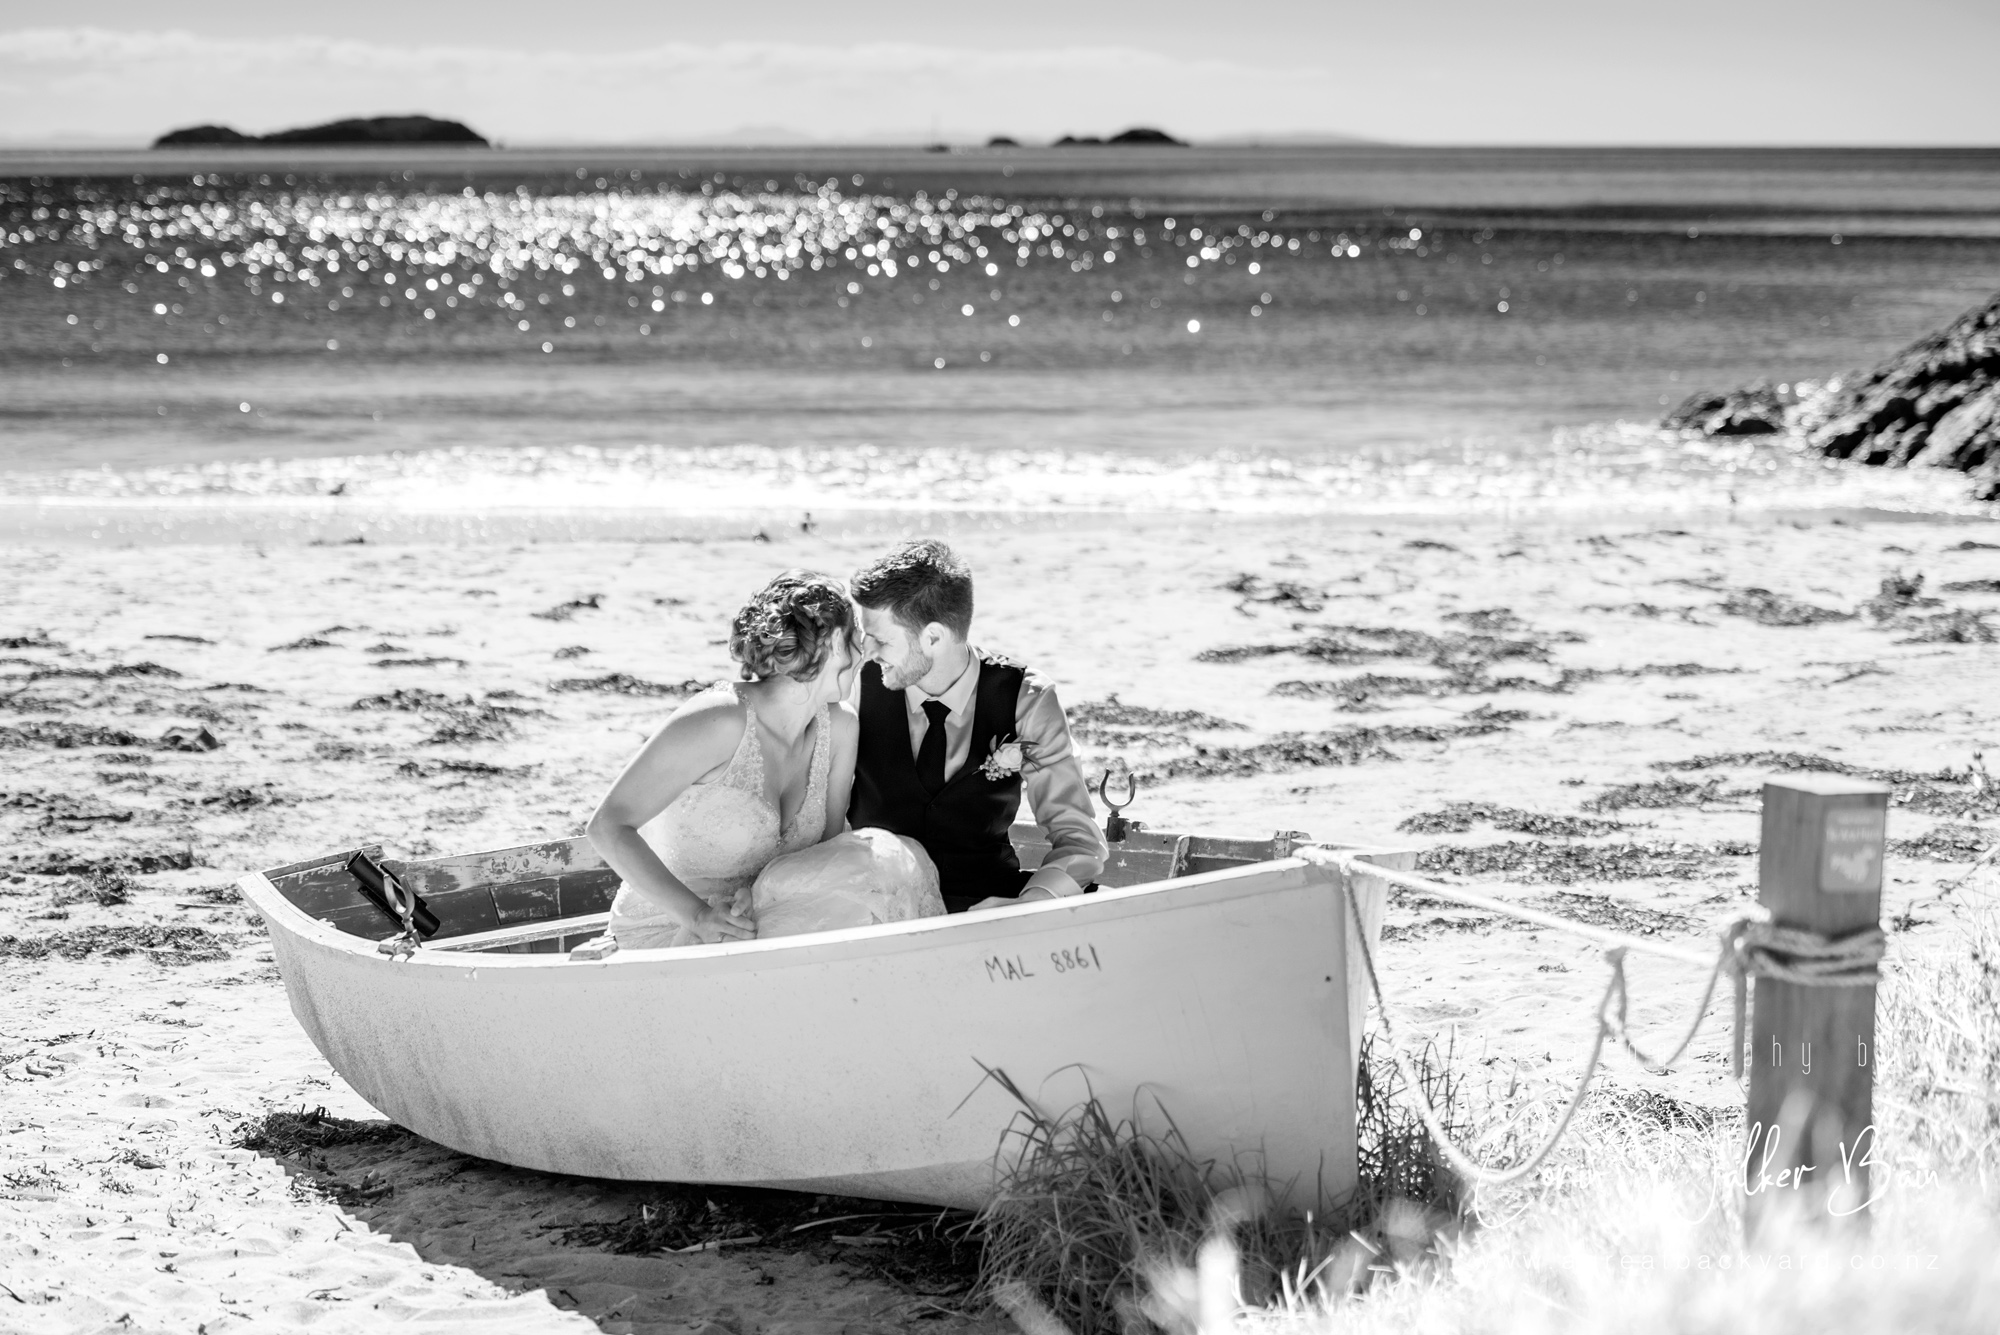 Giggles at Andy and Emma's Waiheke Island wedding by New Zealand wedding photographer Corin Walker Bain of a great backyard